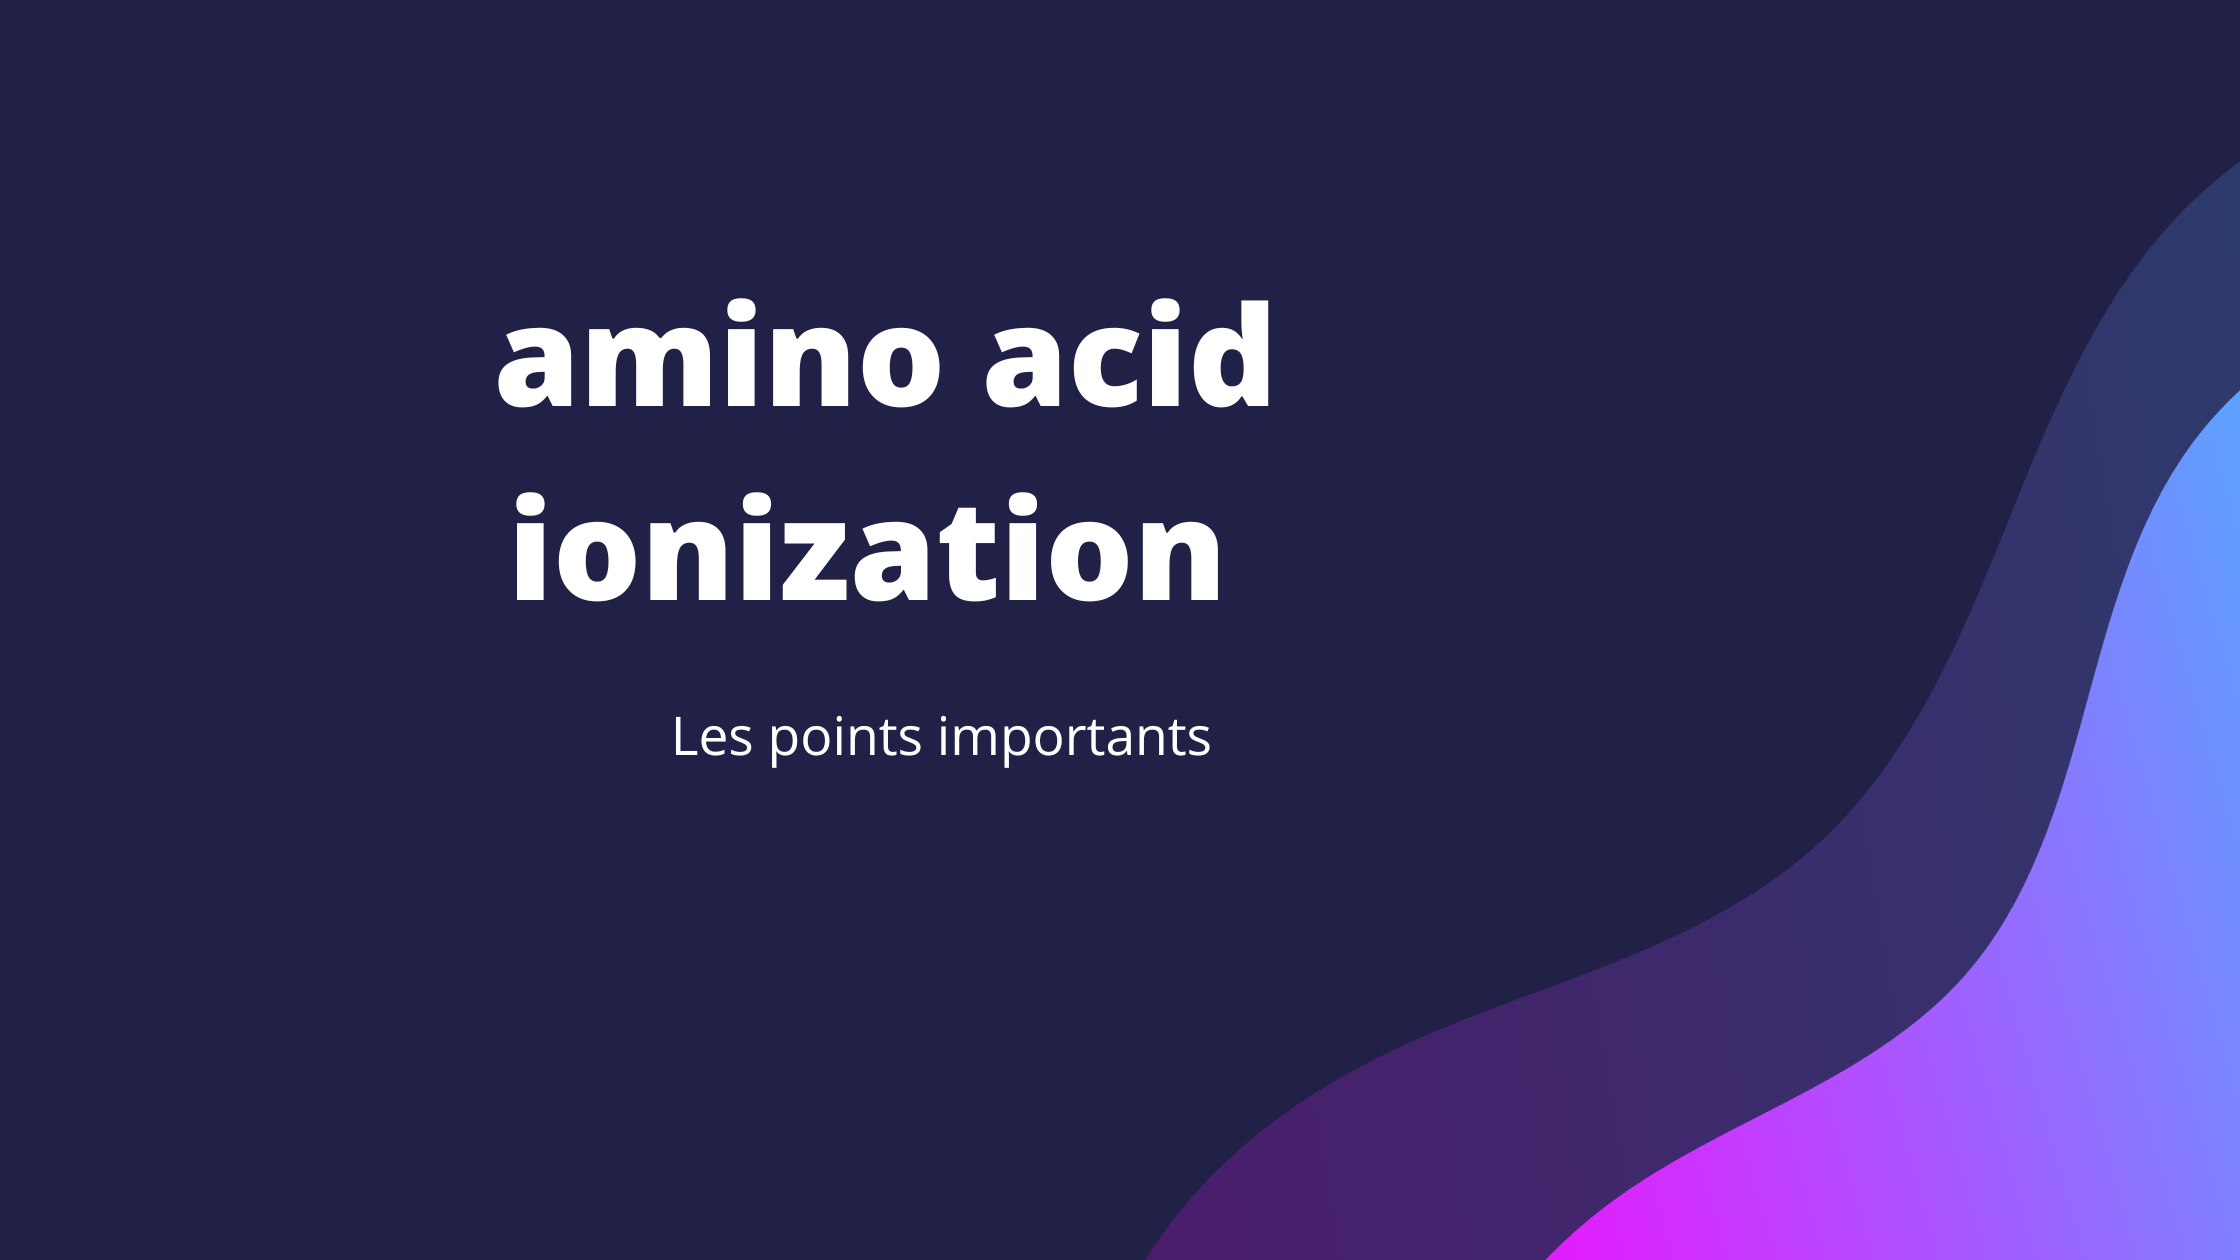 amino acid ionization | Les points importants